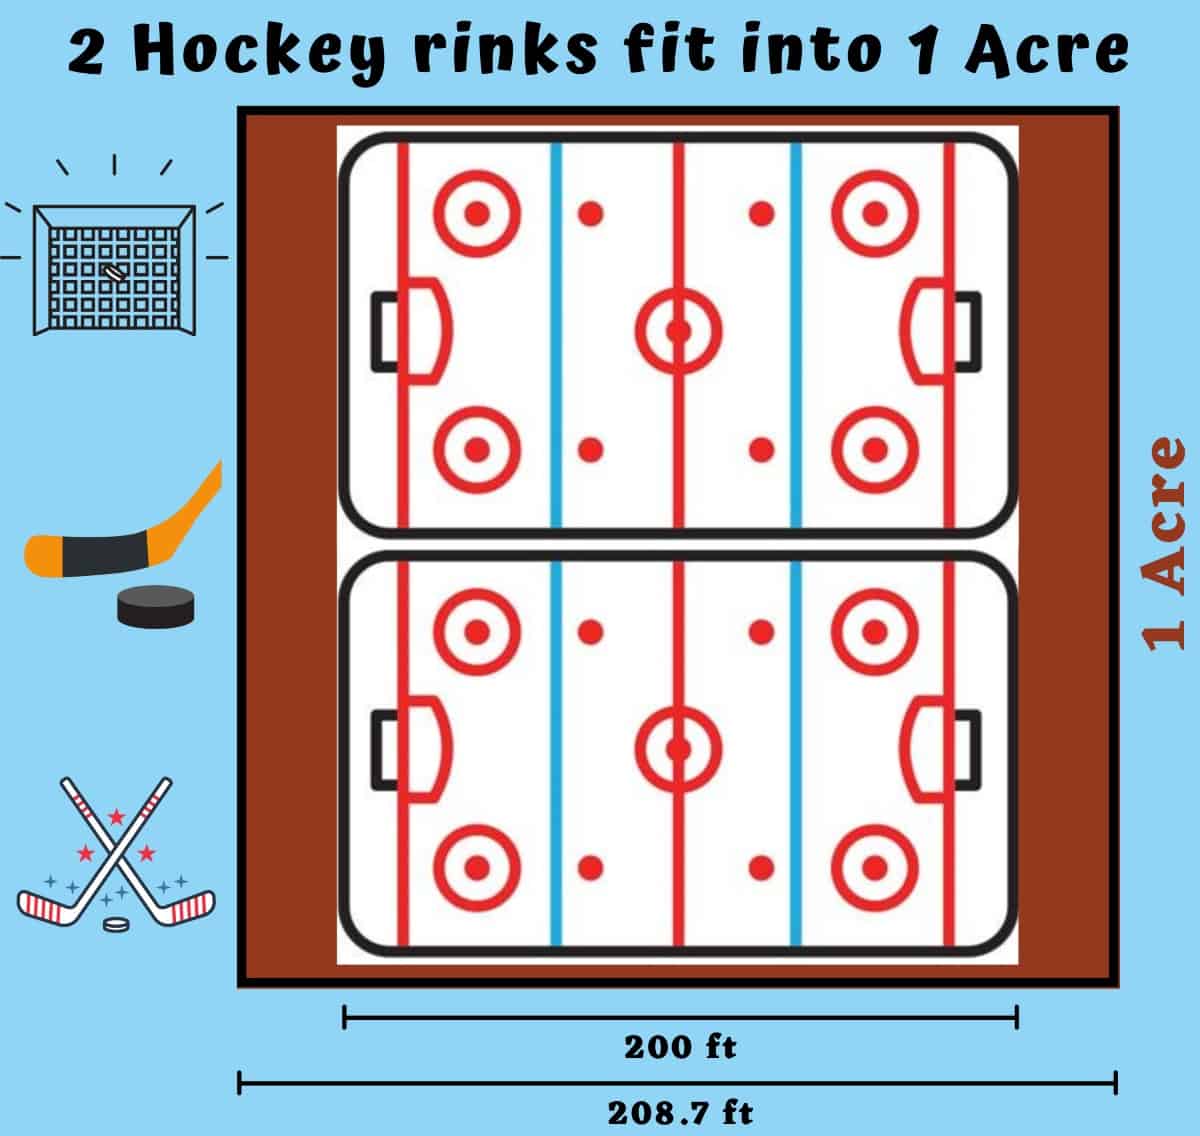 How big is an Acre - ice hockey